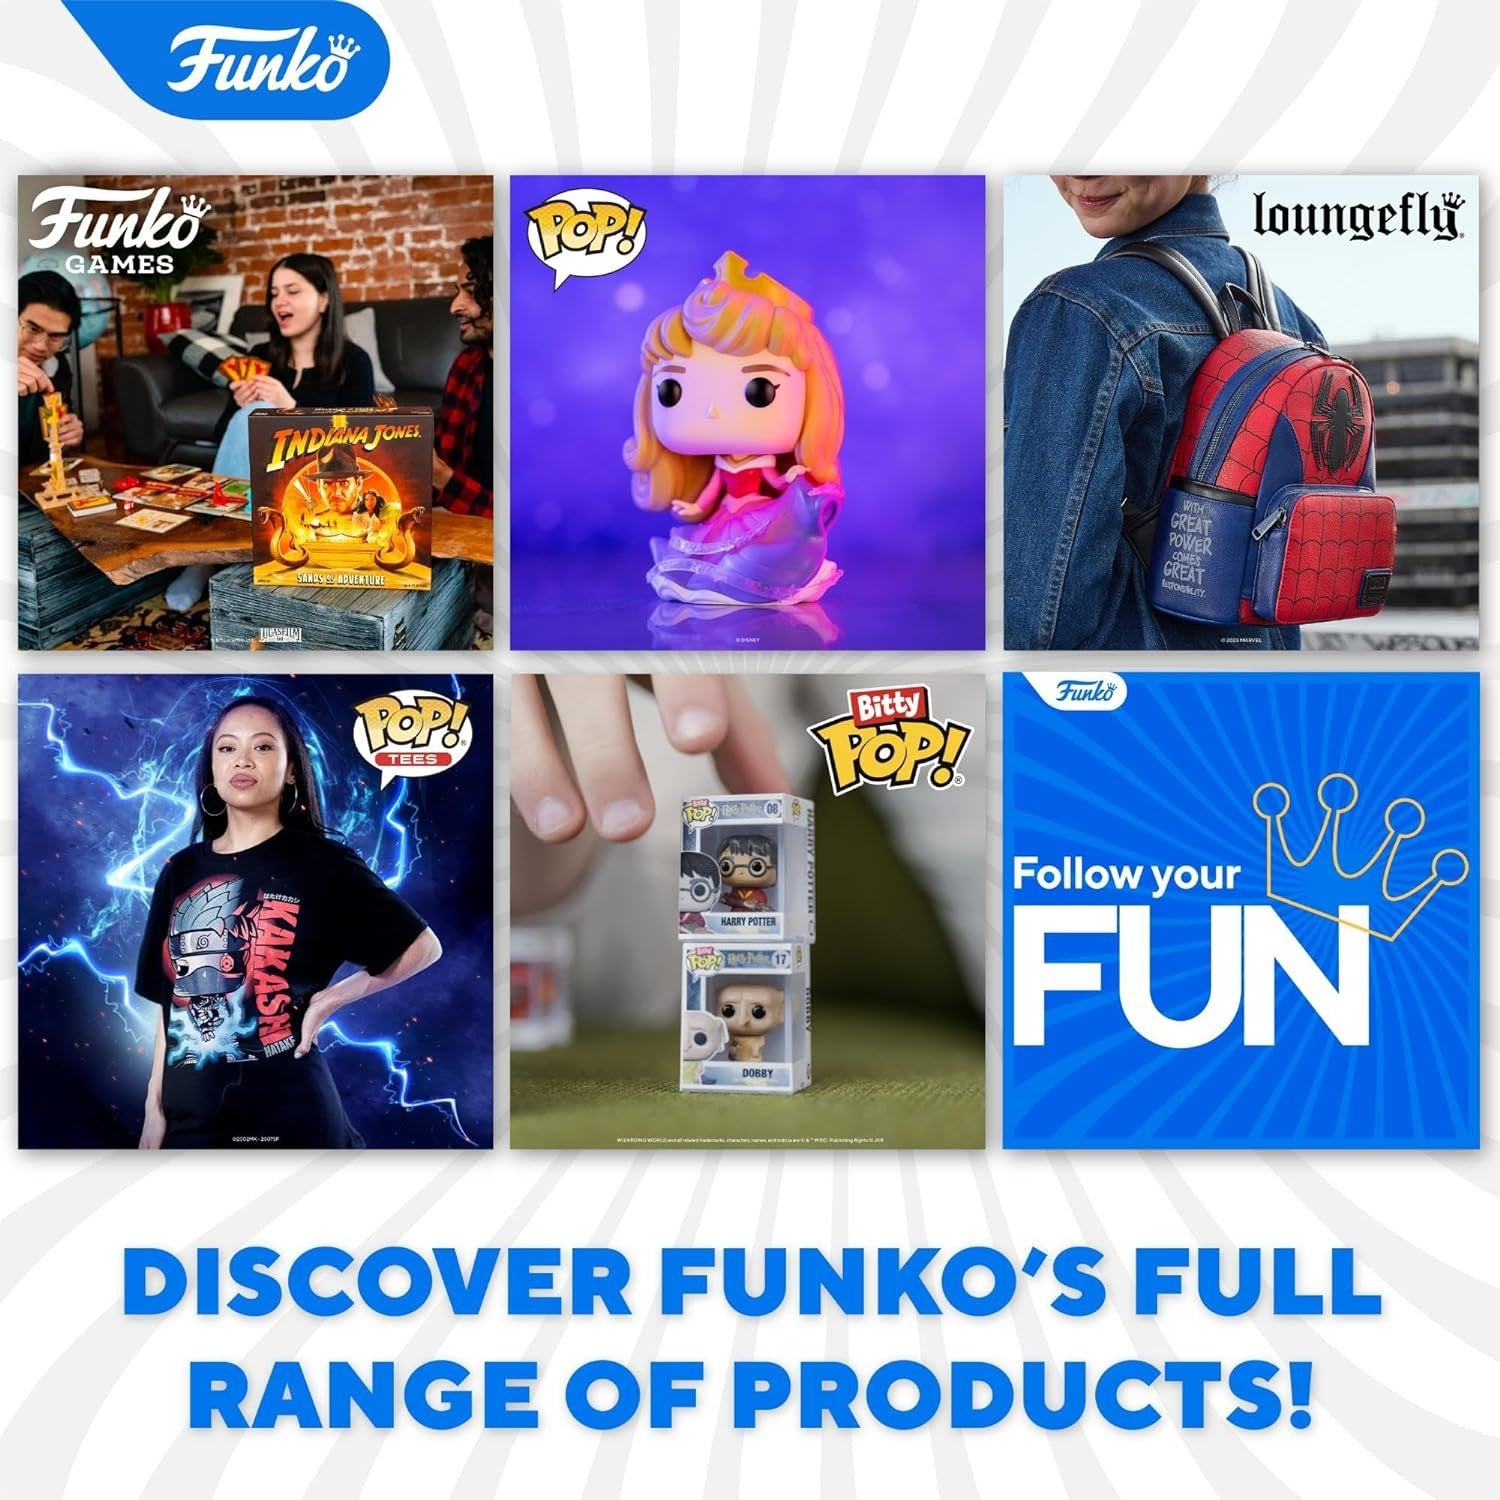 Funko Pop! Disney: Minnie Mouse Trick or Treat